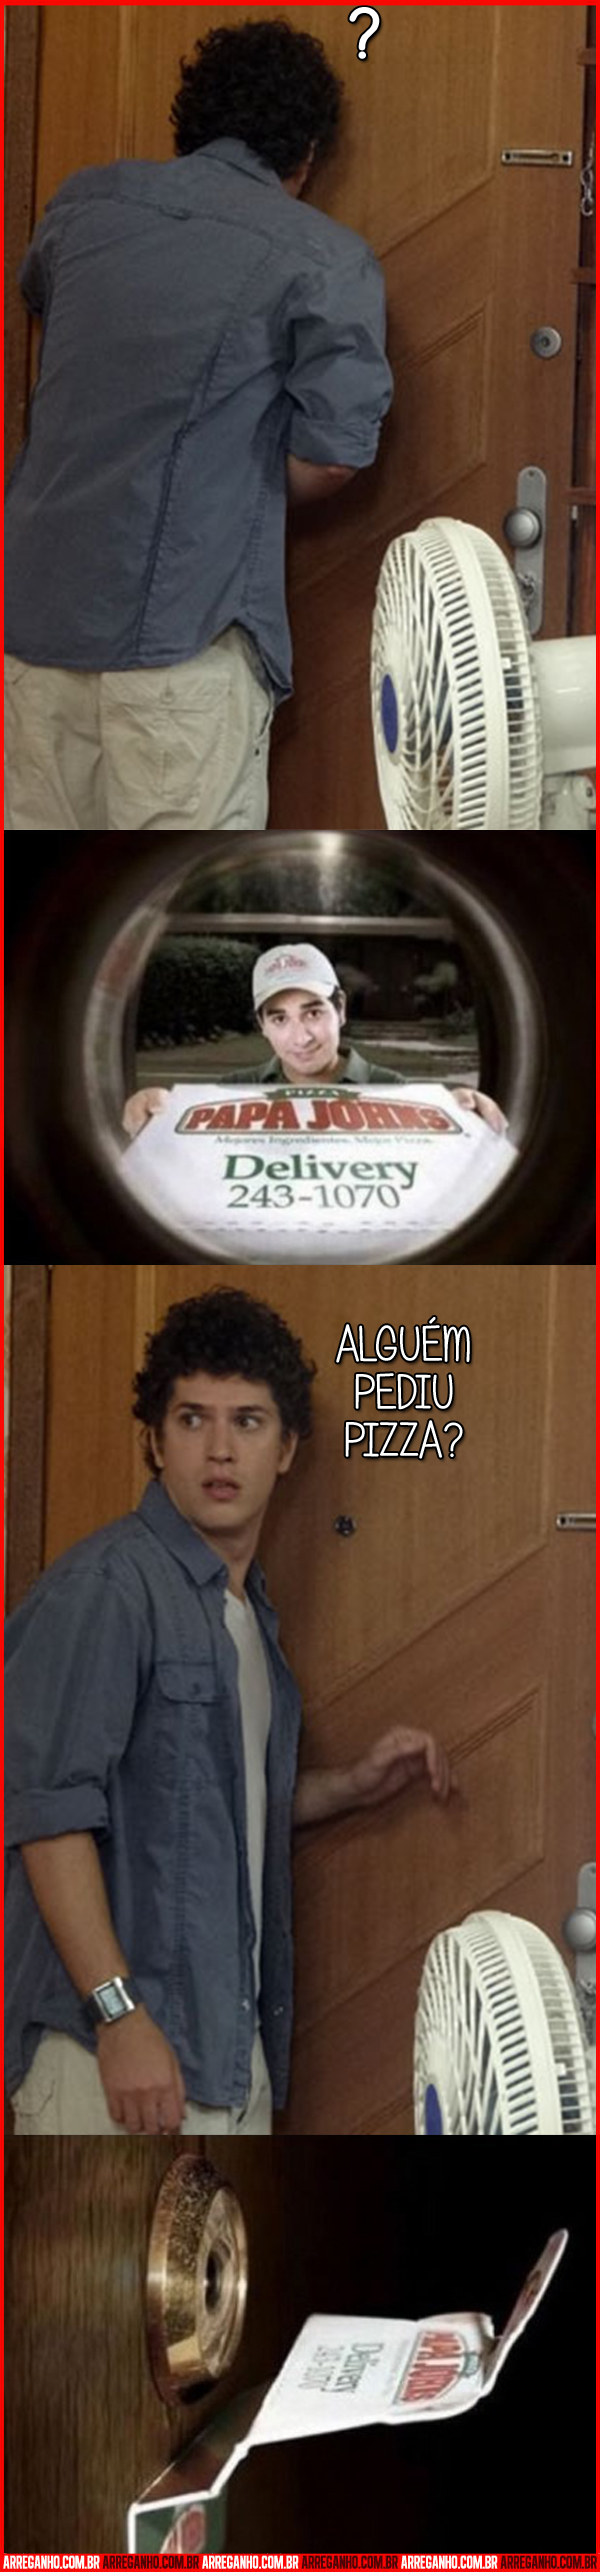 Trollagem do Entregador de Pizza